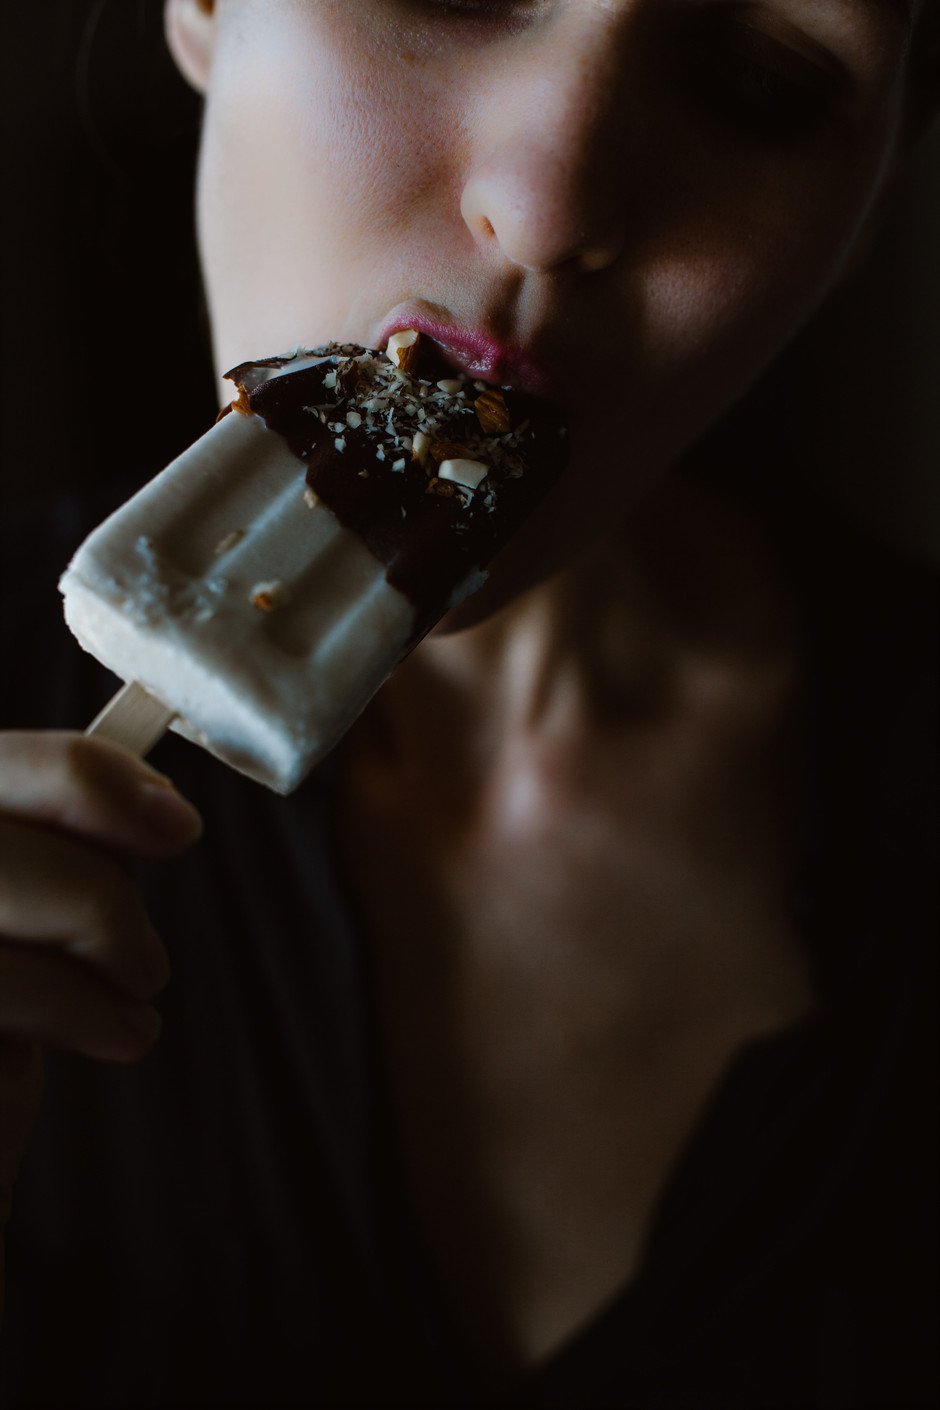 closeup portrait of a person eating an ice cream bar.